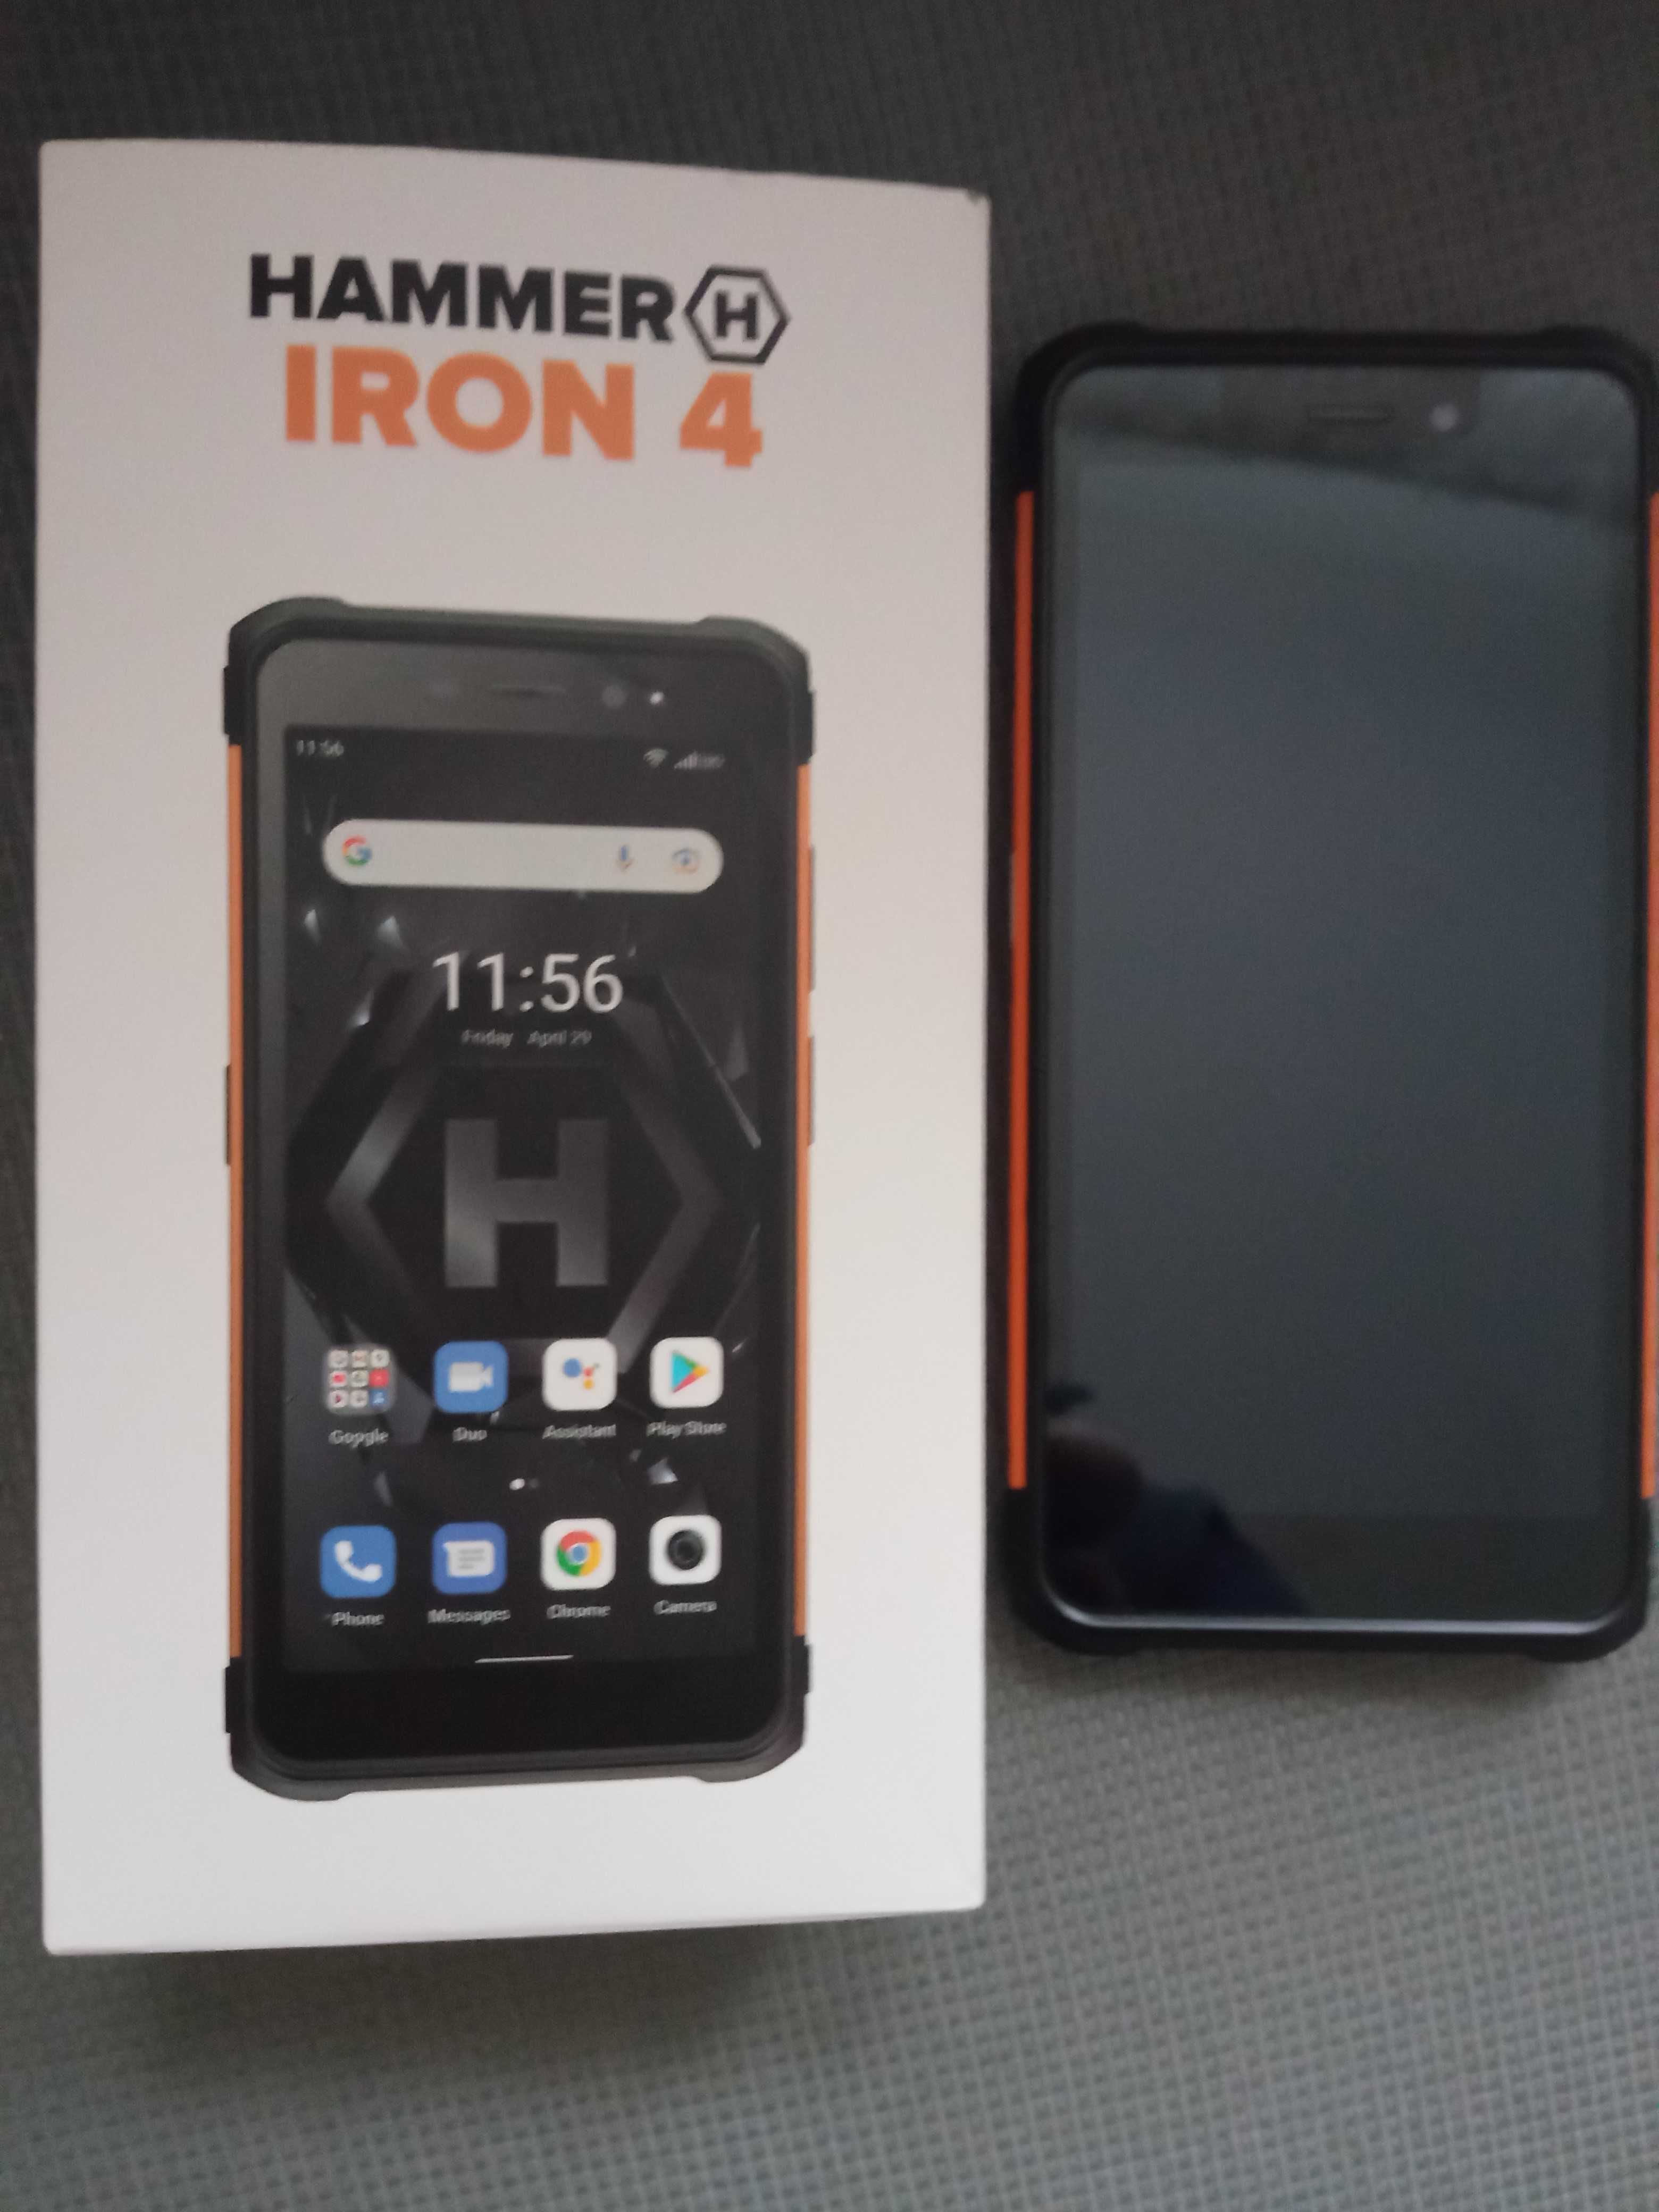 Pancerny smartfon Hammer Iron 4 - Okazja na gwarancji